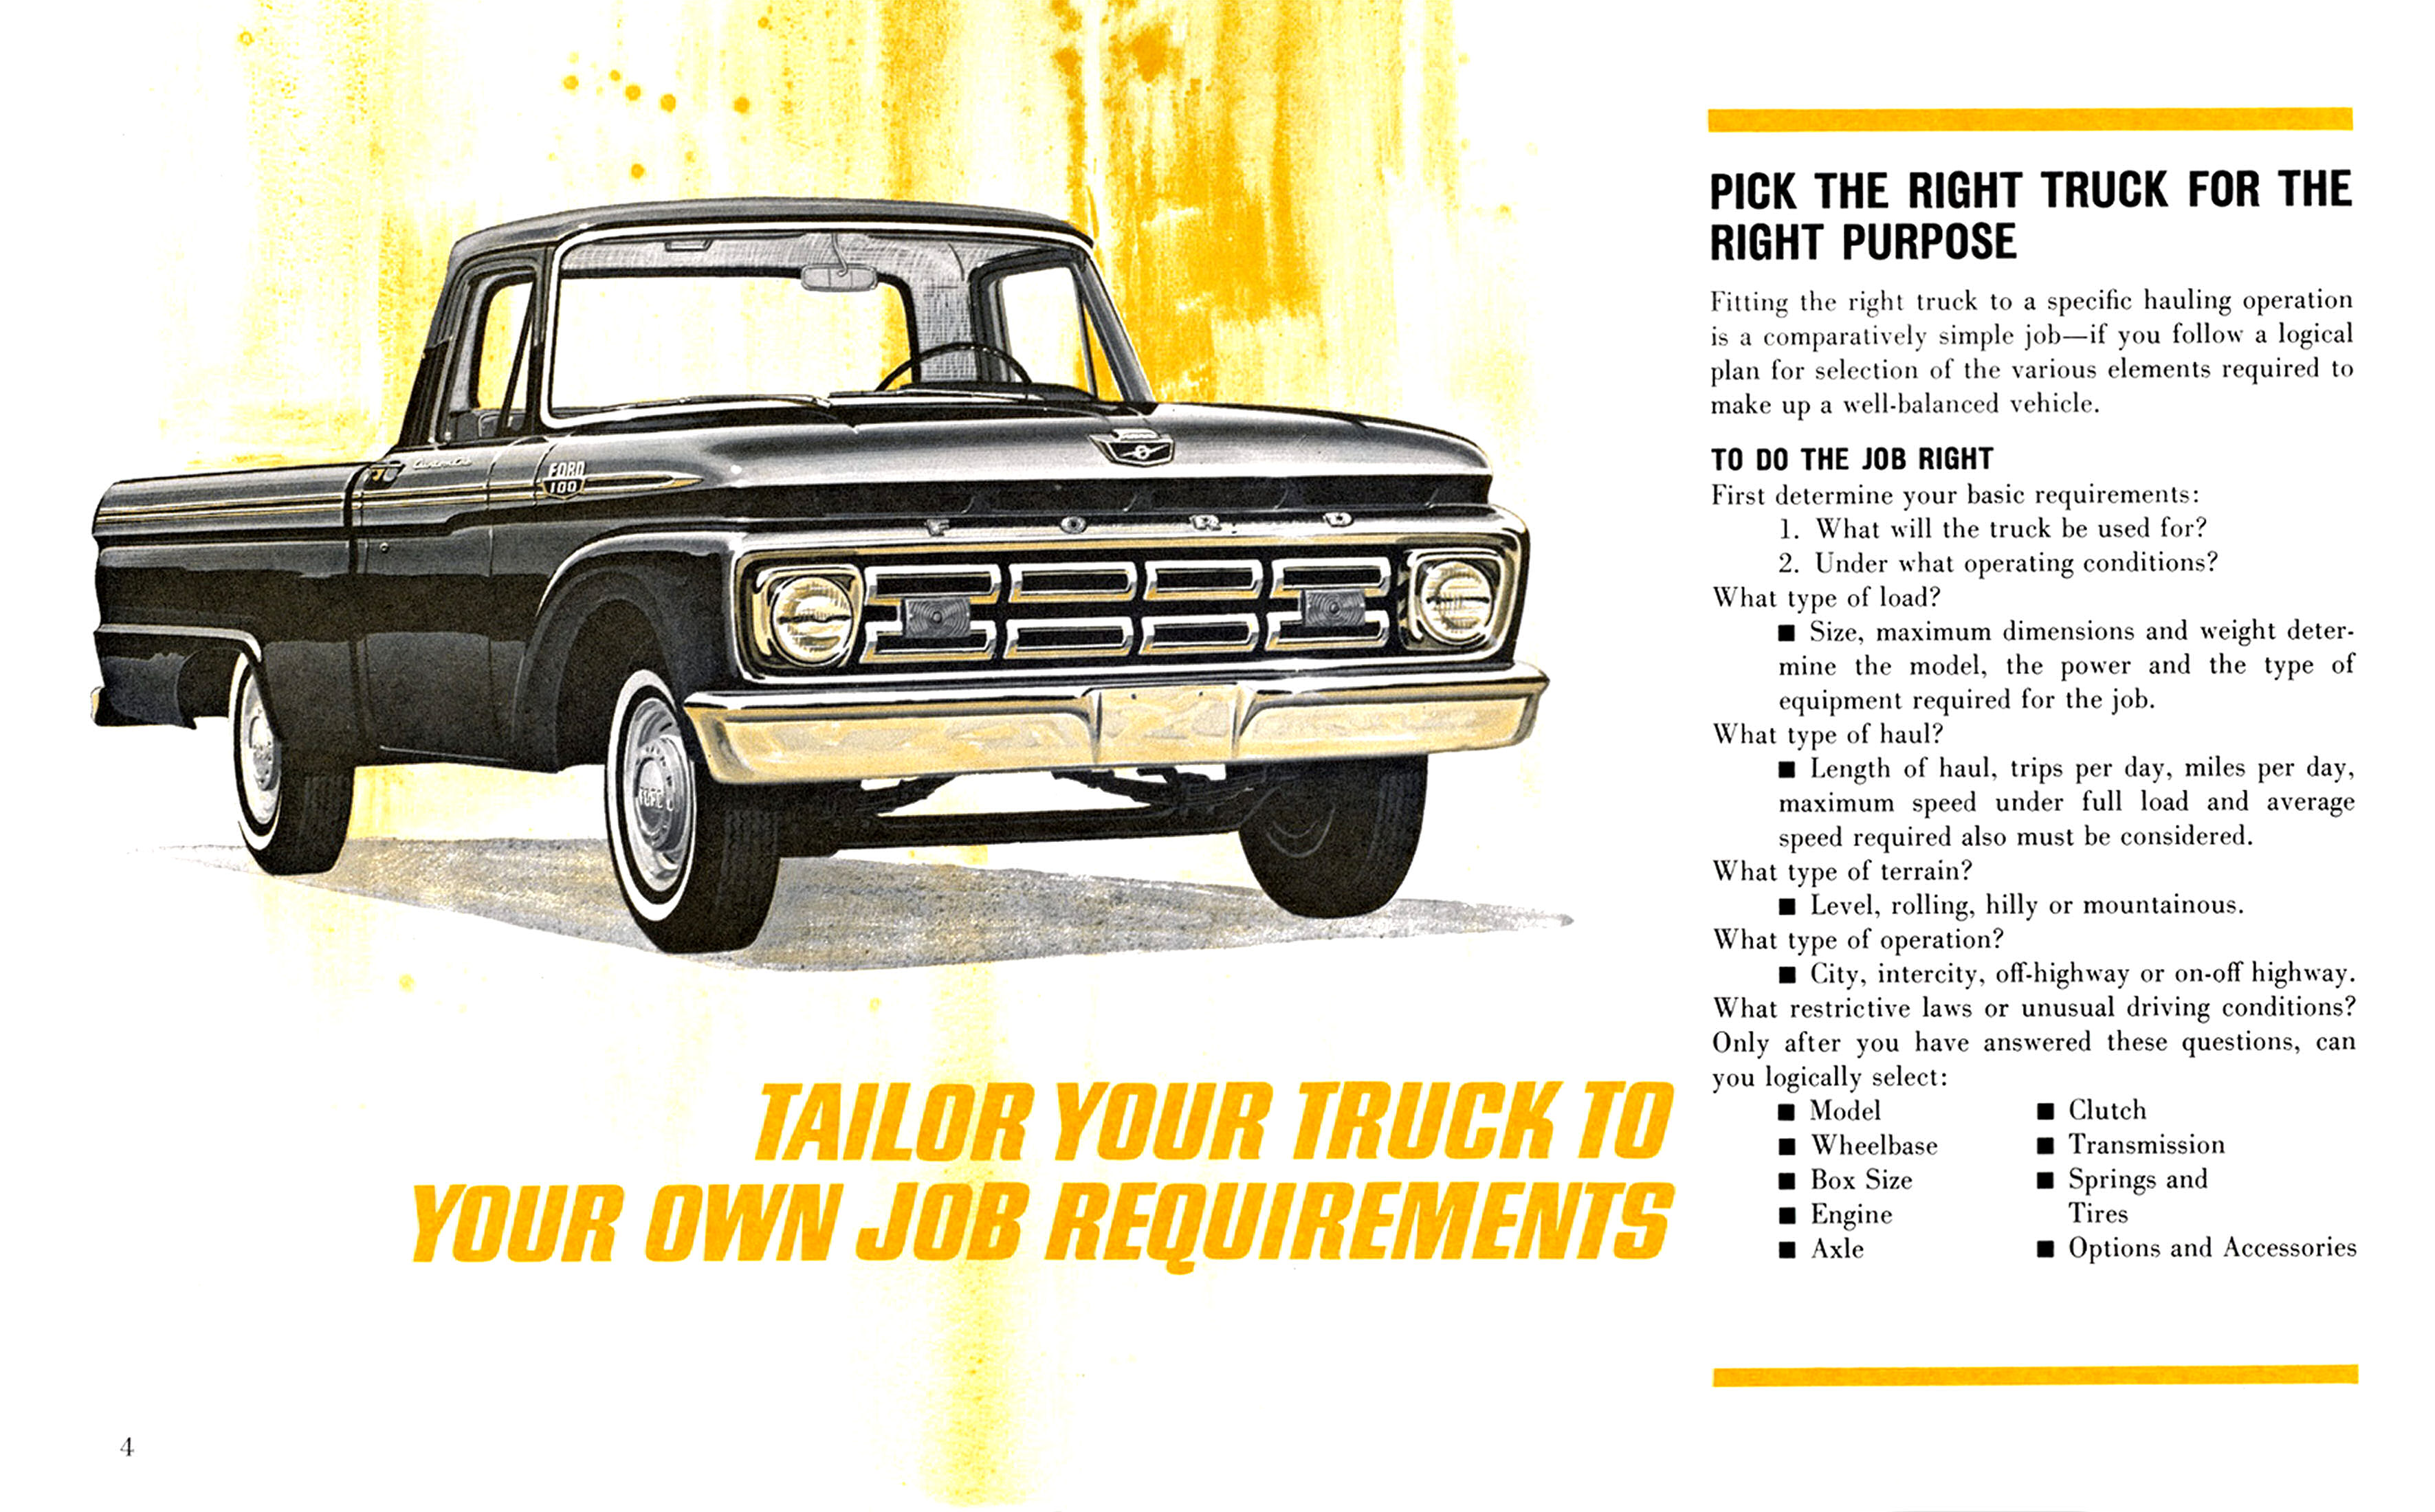 1964 Ford Pickup Trucks-04